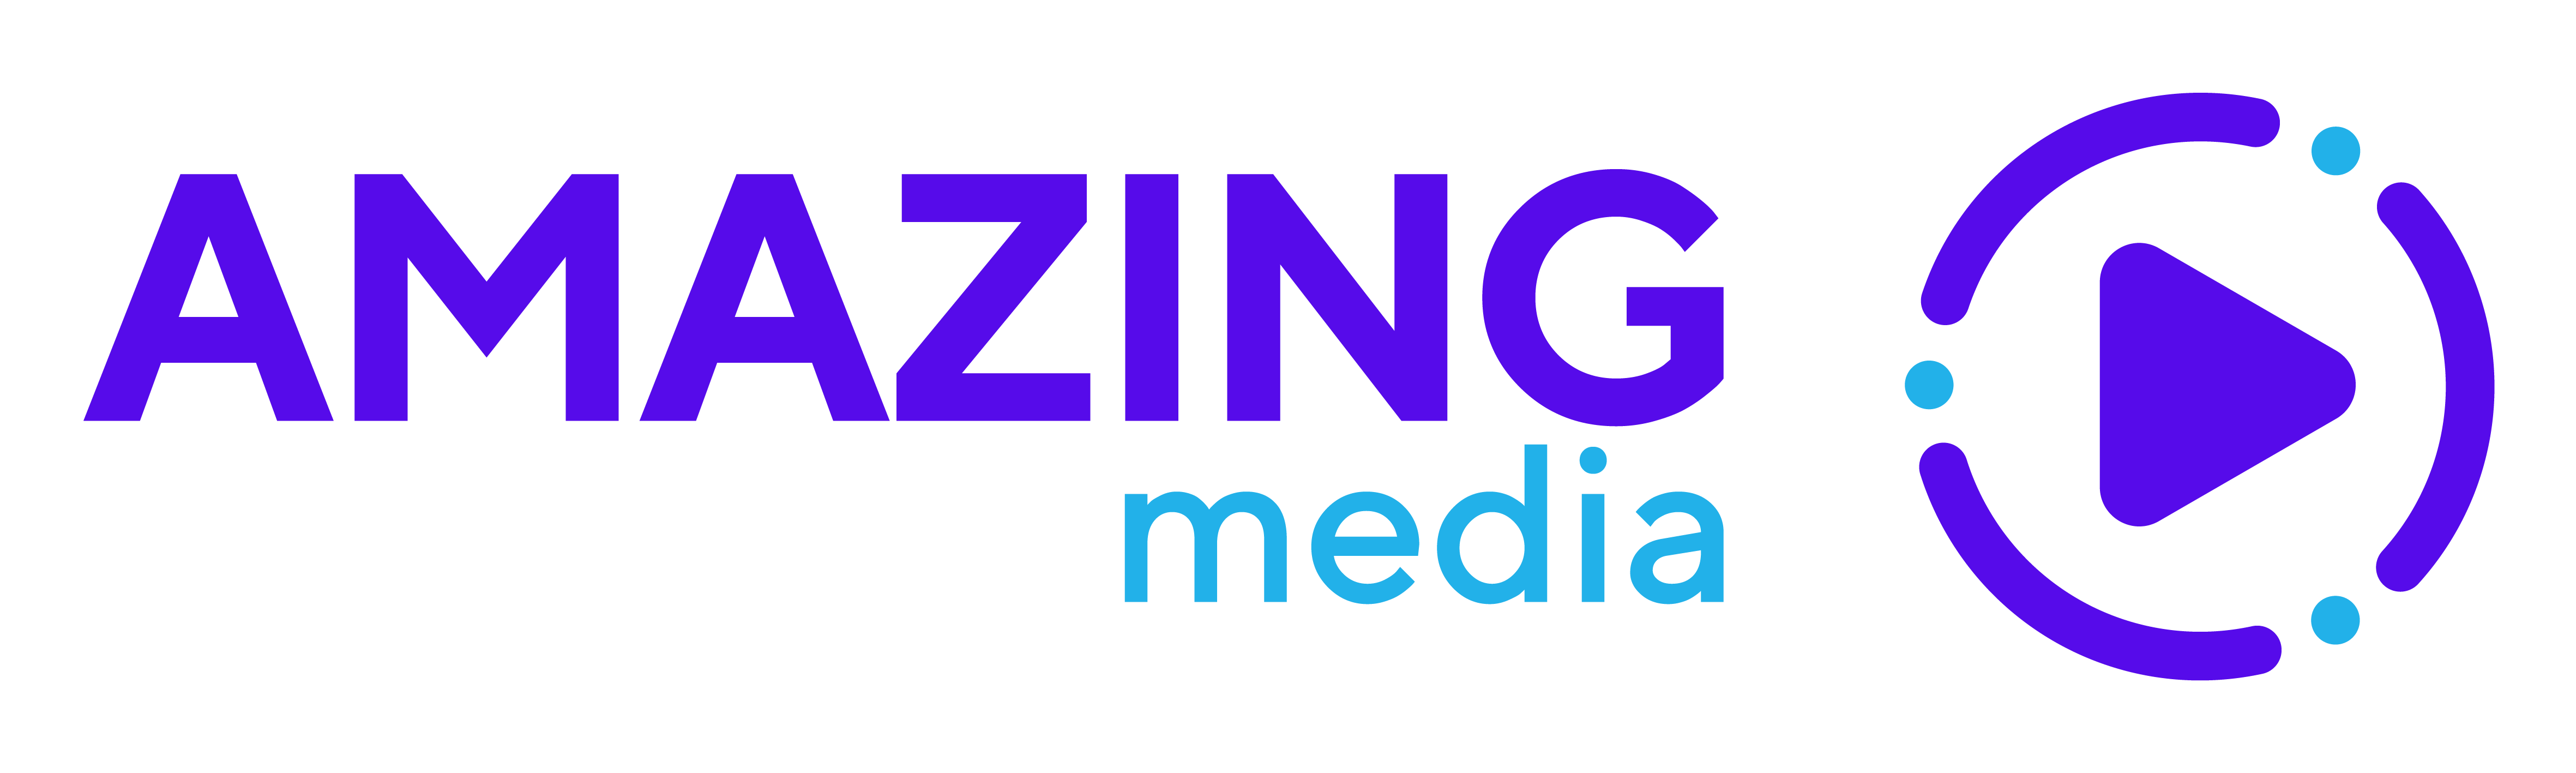 Amazing Media logo